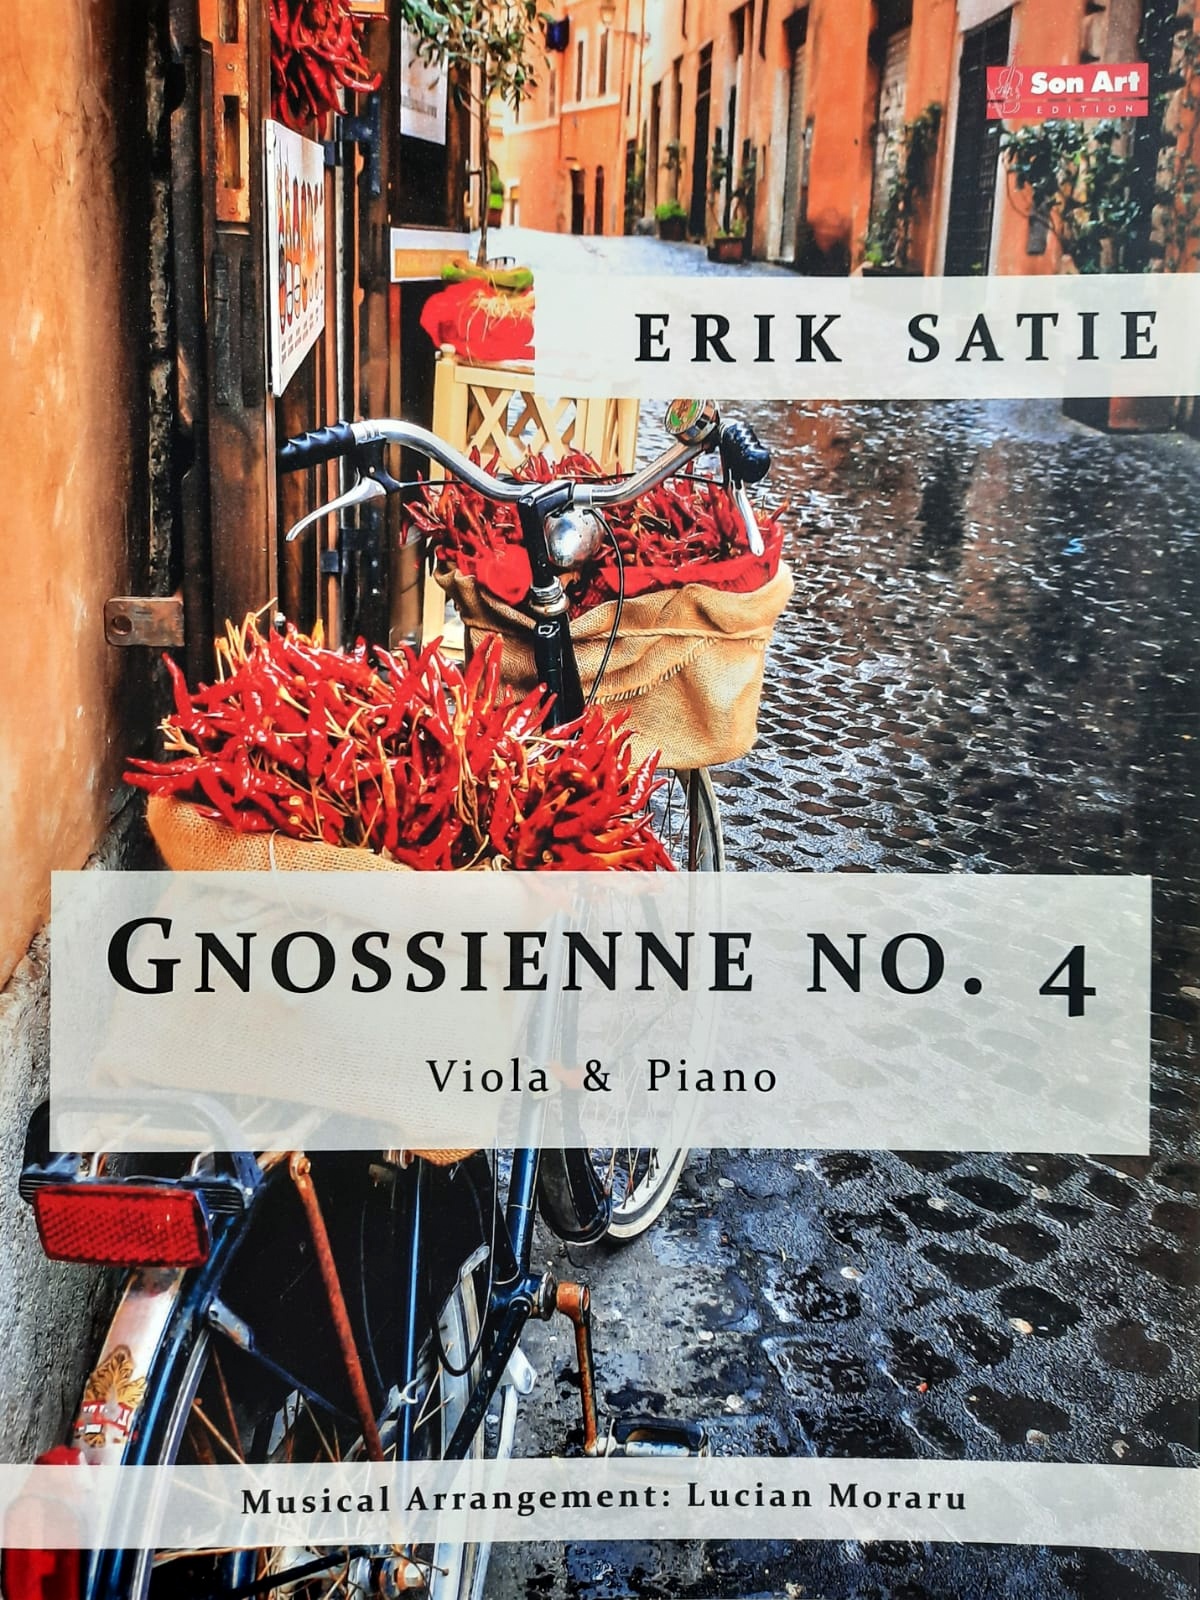 Gnossienne Nr.4 - Erik Satie - Viola si pian